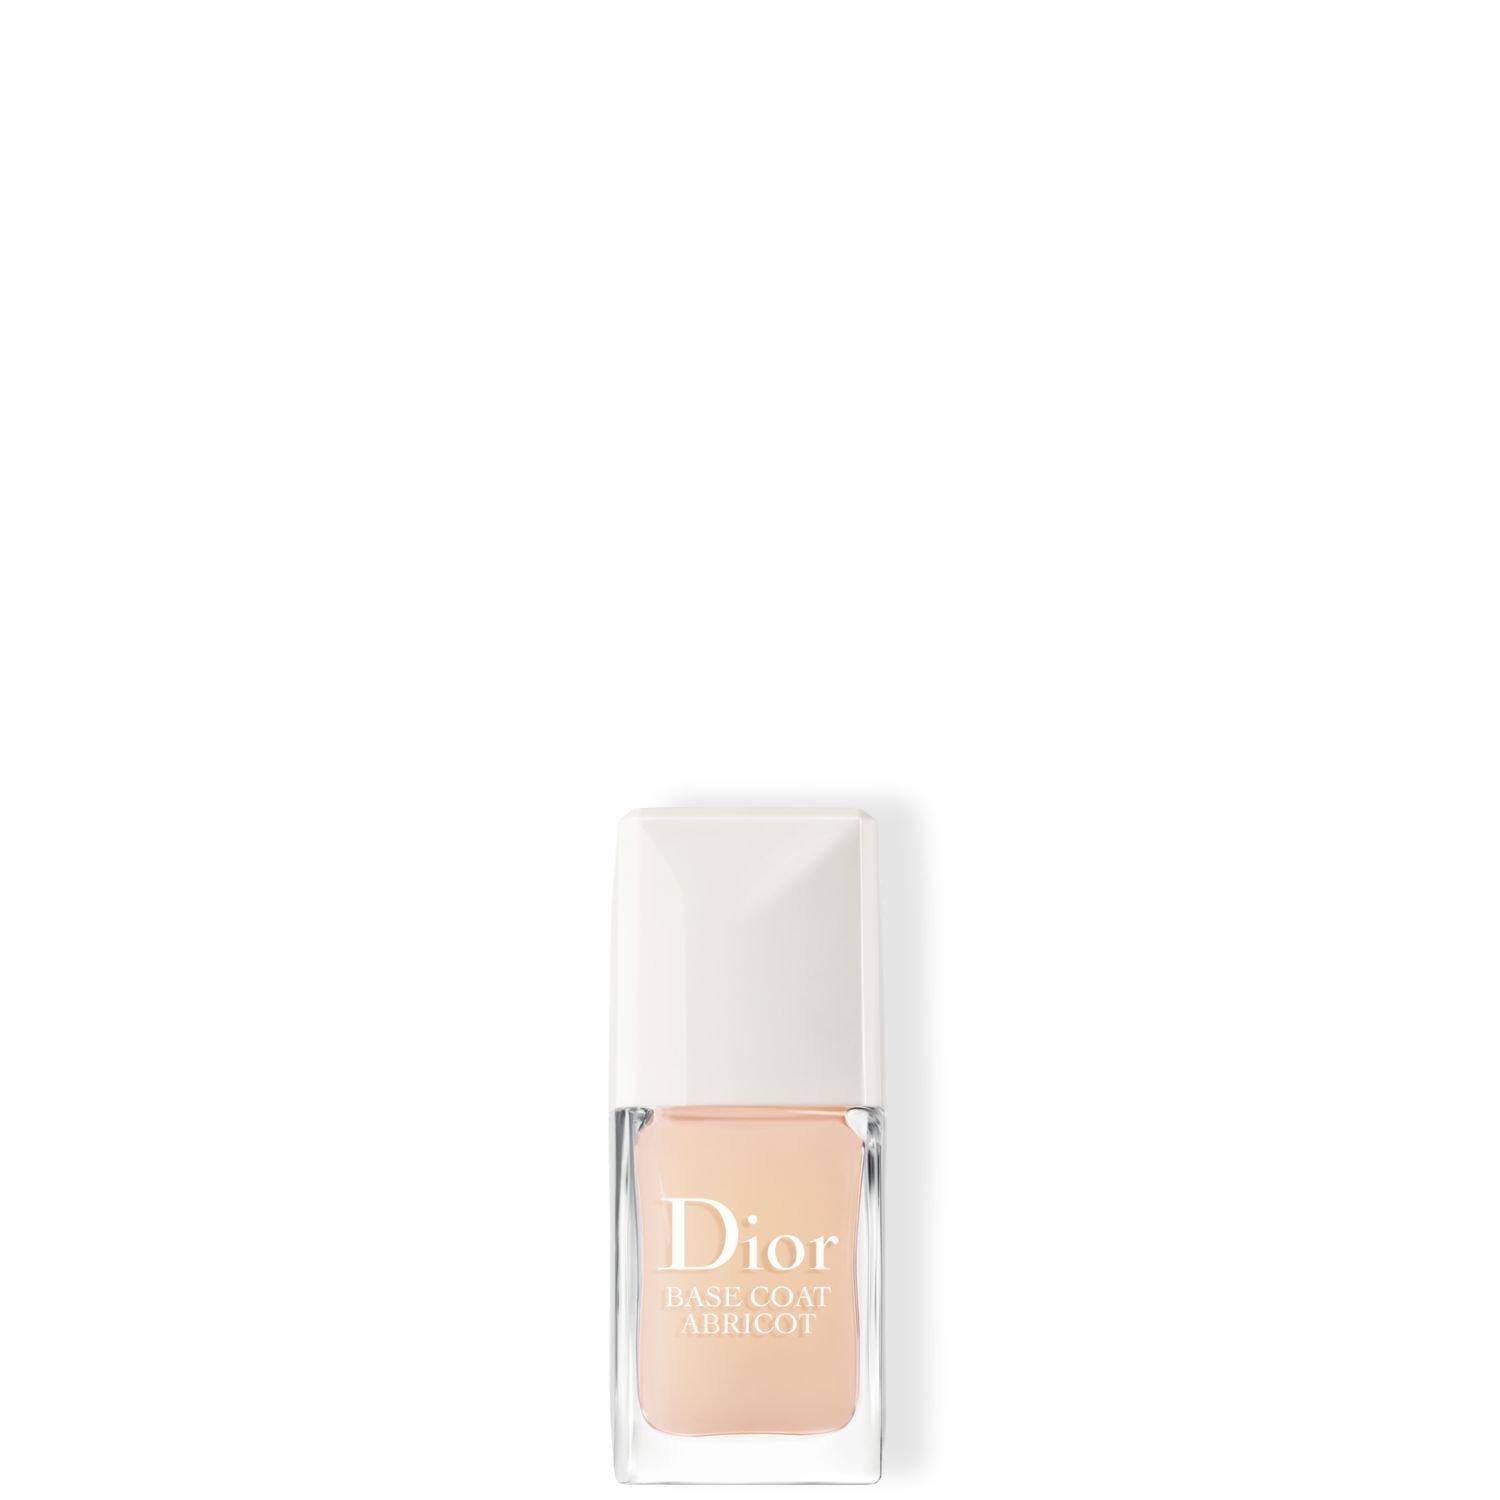 Image of Dior Base Coat Abricot - 10ml